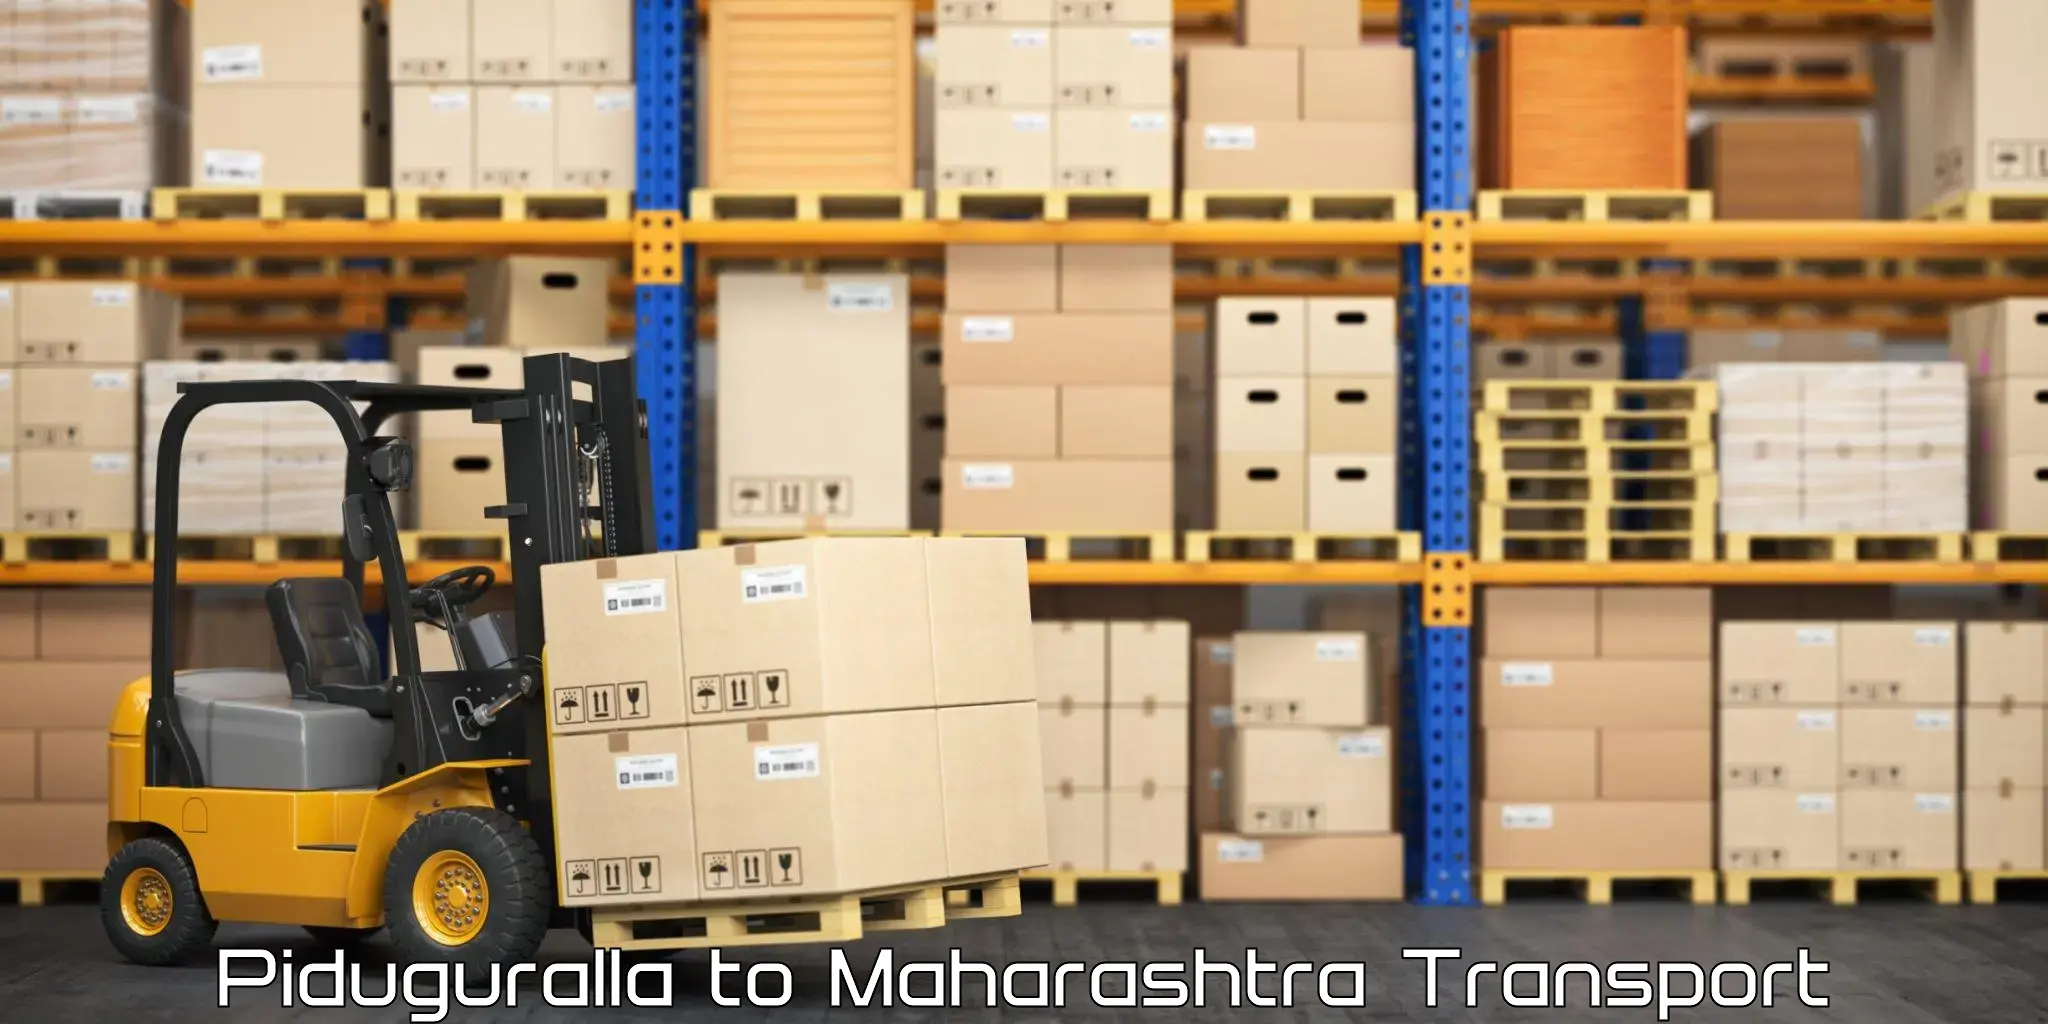 Road transport online services Piduguralla to Maharashtra